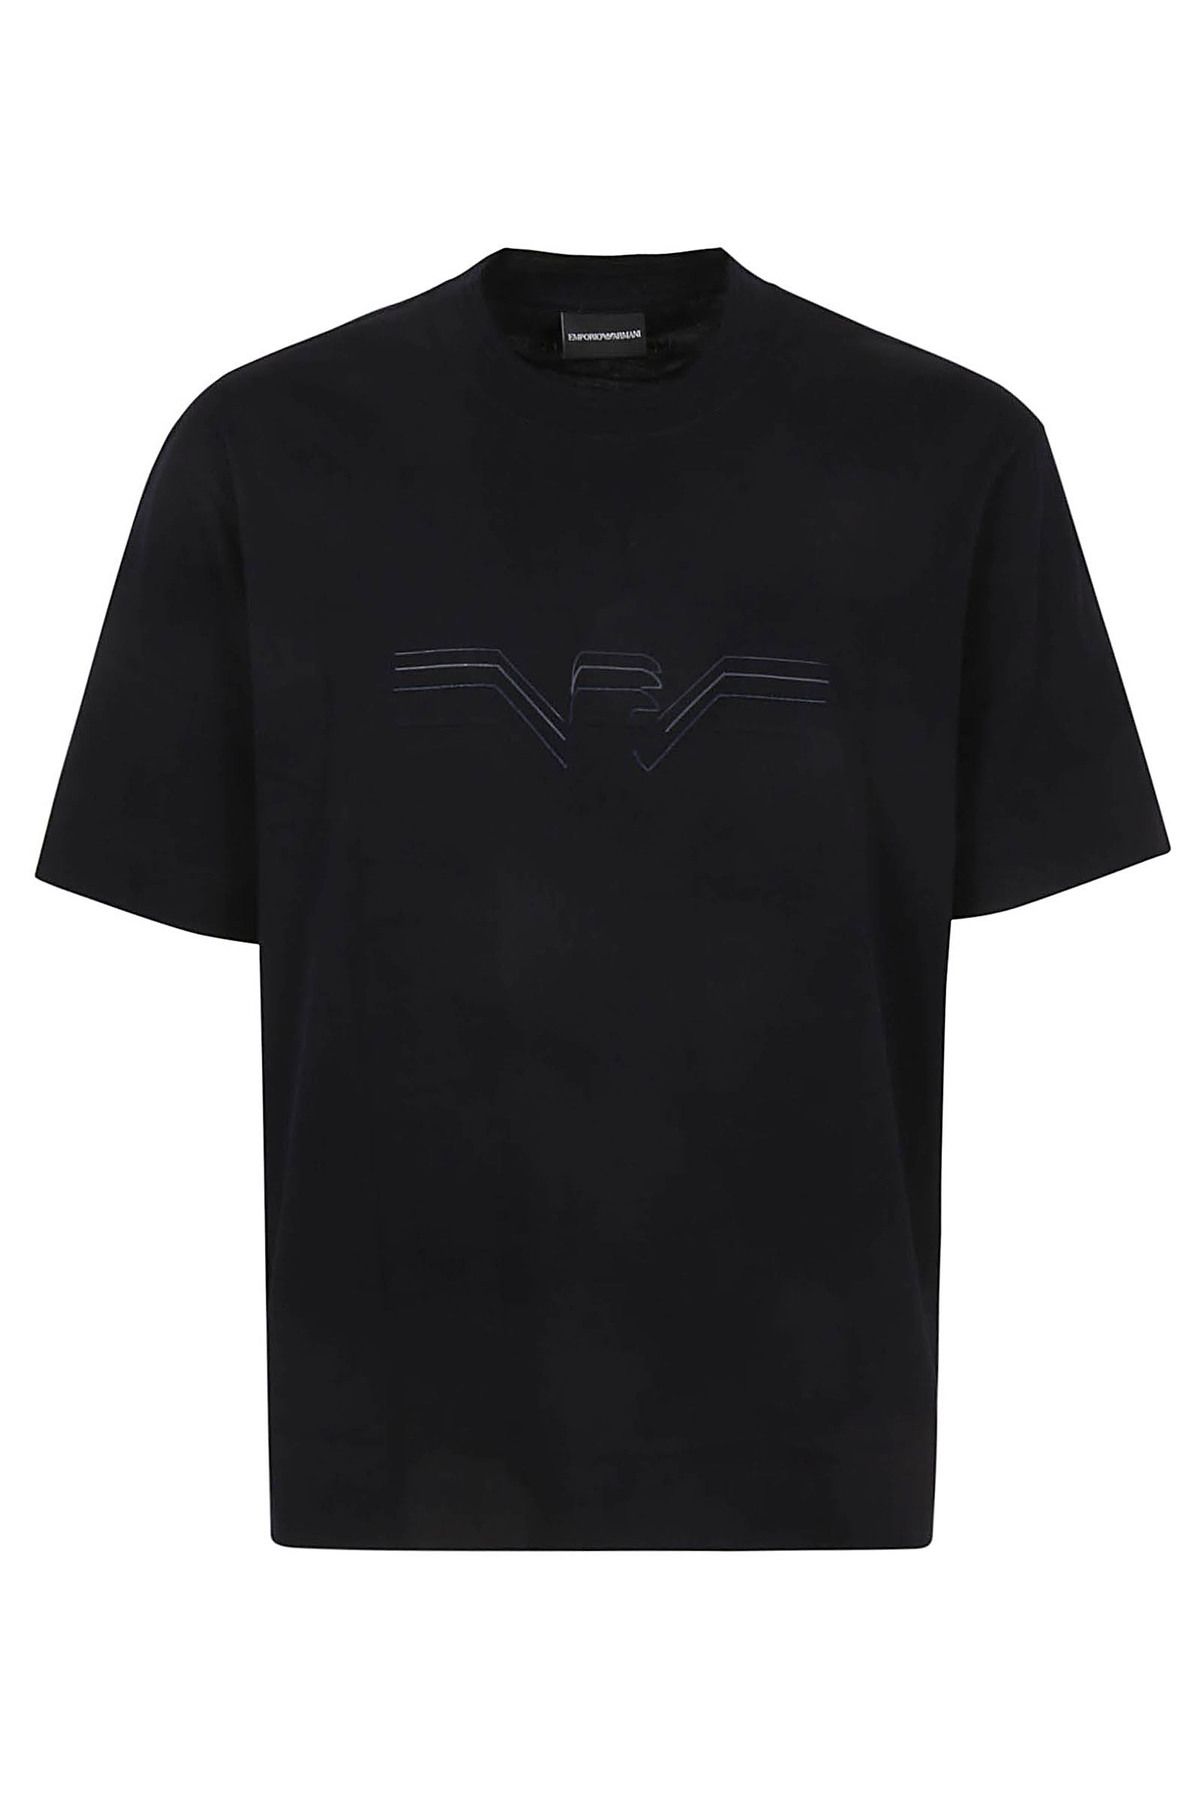 Emporio Armani Erkek Marka Logolu Organik Pamuklu Kısa Kollu Lacivert T-Shirt 3D1T89 1JWZZ-0920